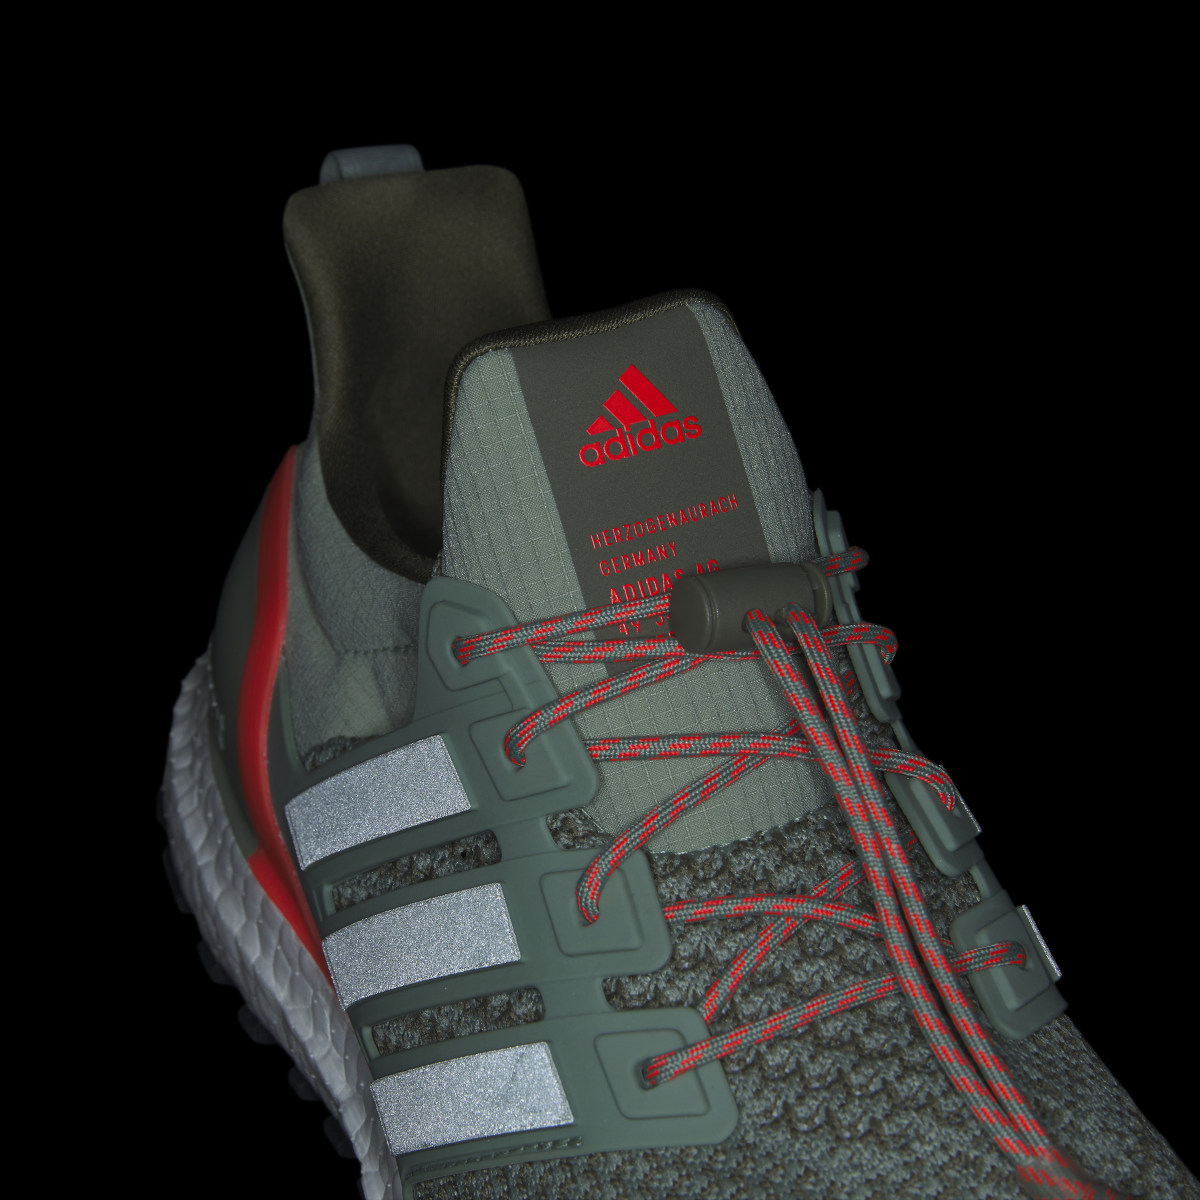 Adidas Ultraboost 1.0 Schuh. 12